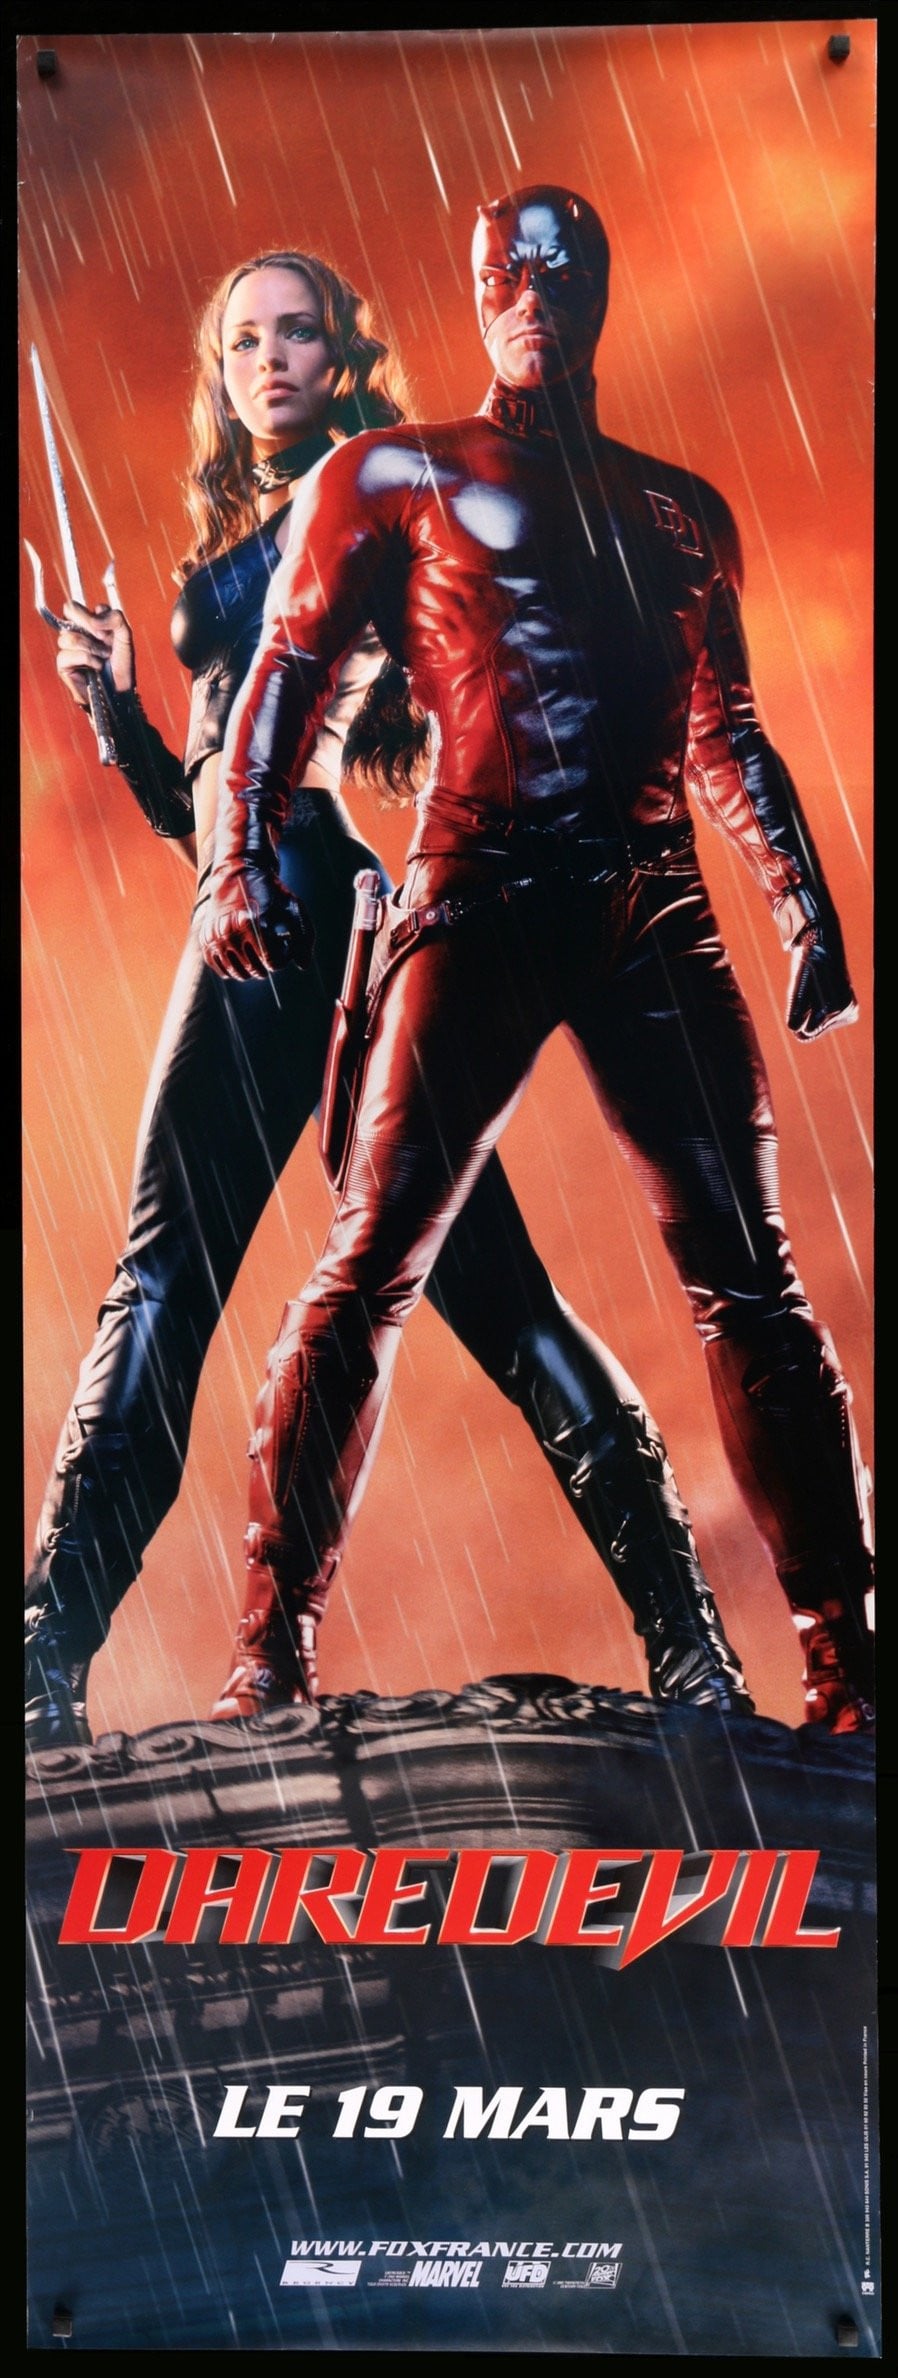 Daredevil (2003) original movie poster for sale at Original Film Art